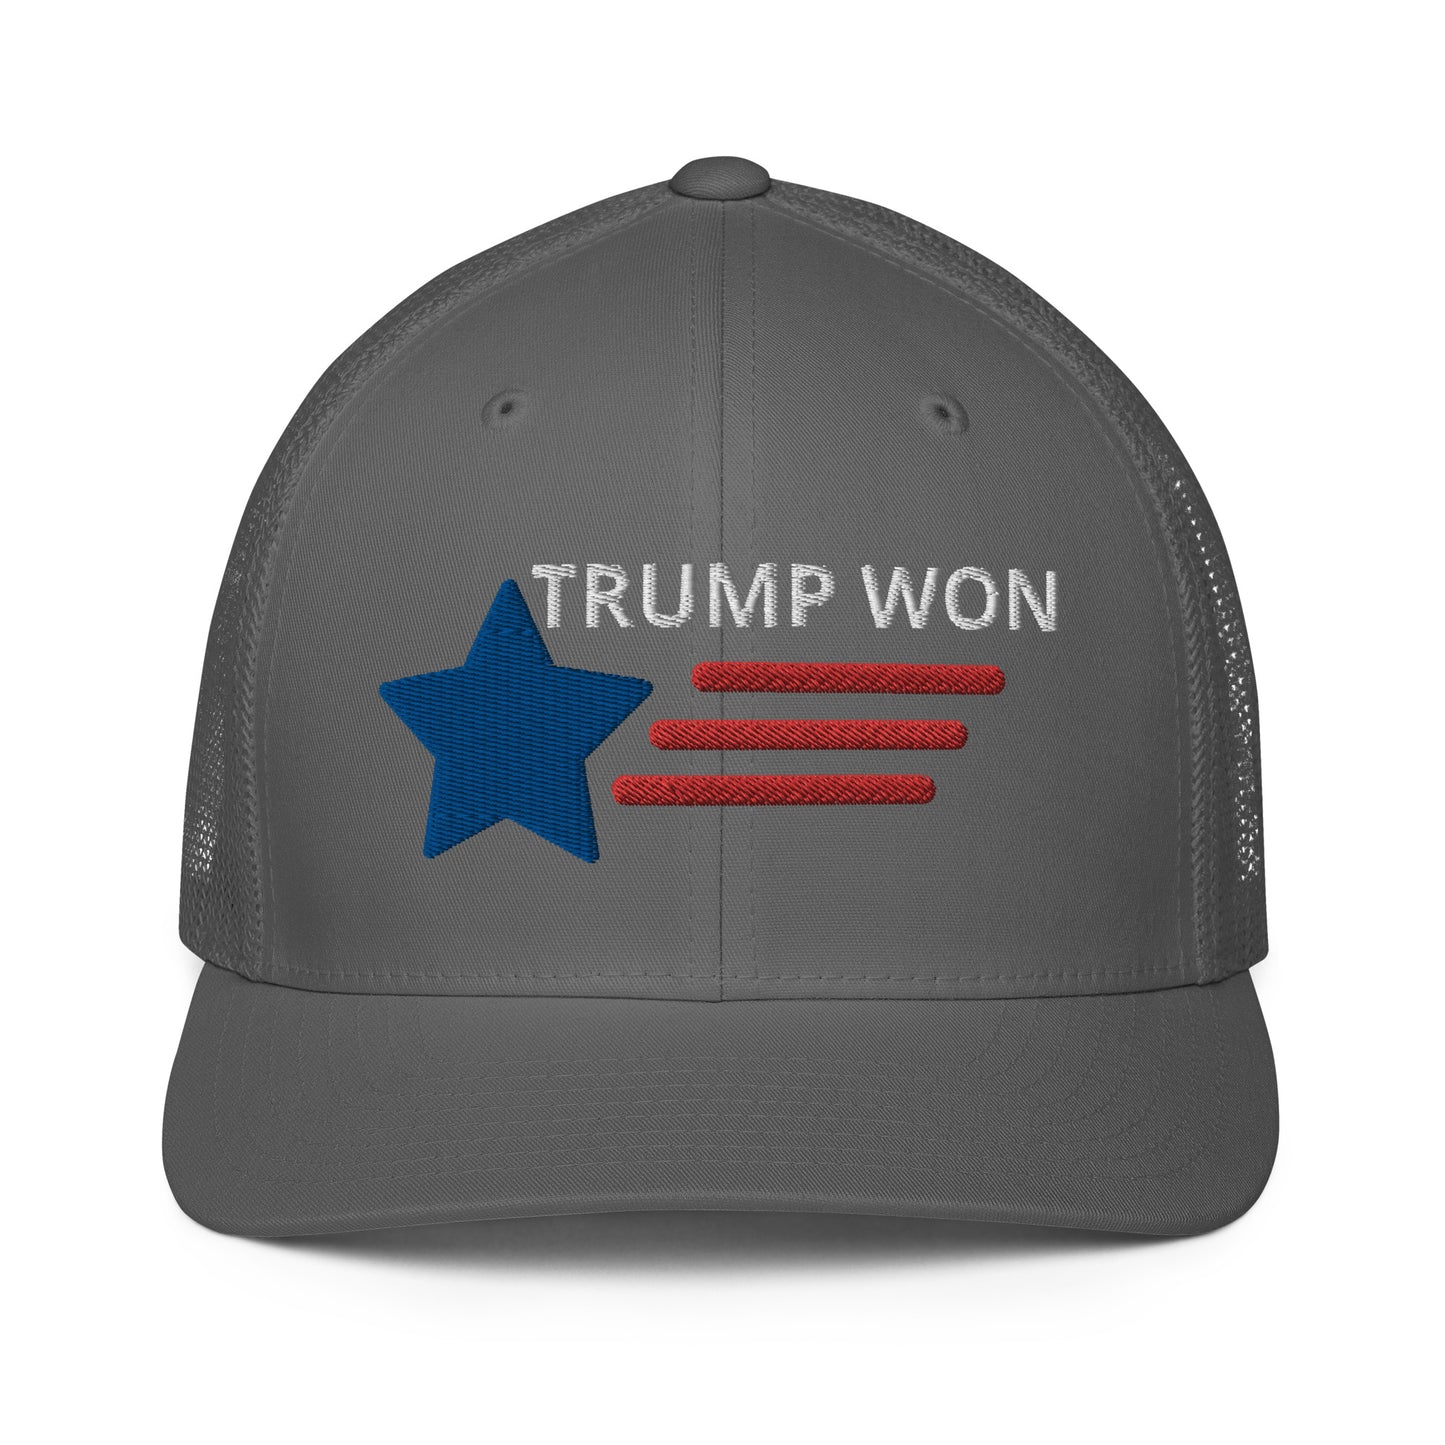 TRUMP WON 2020 Election Closed-back trucker cap